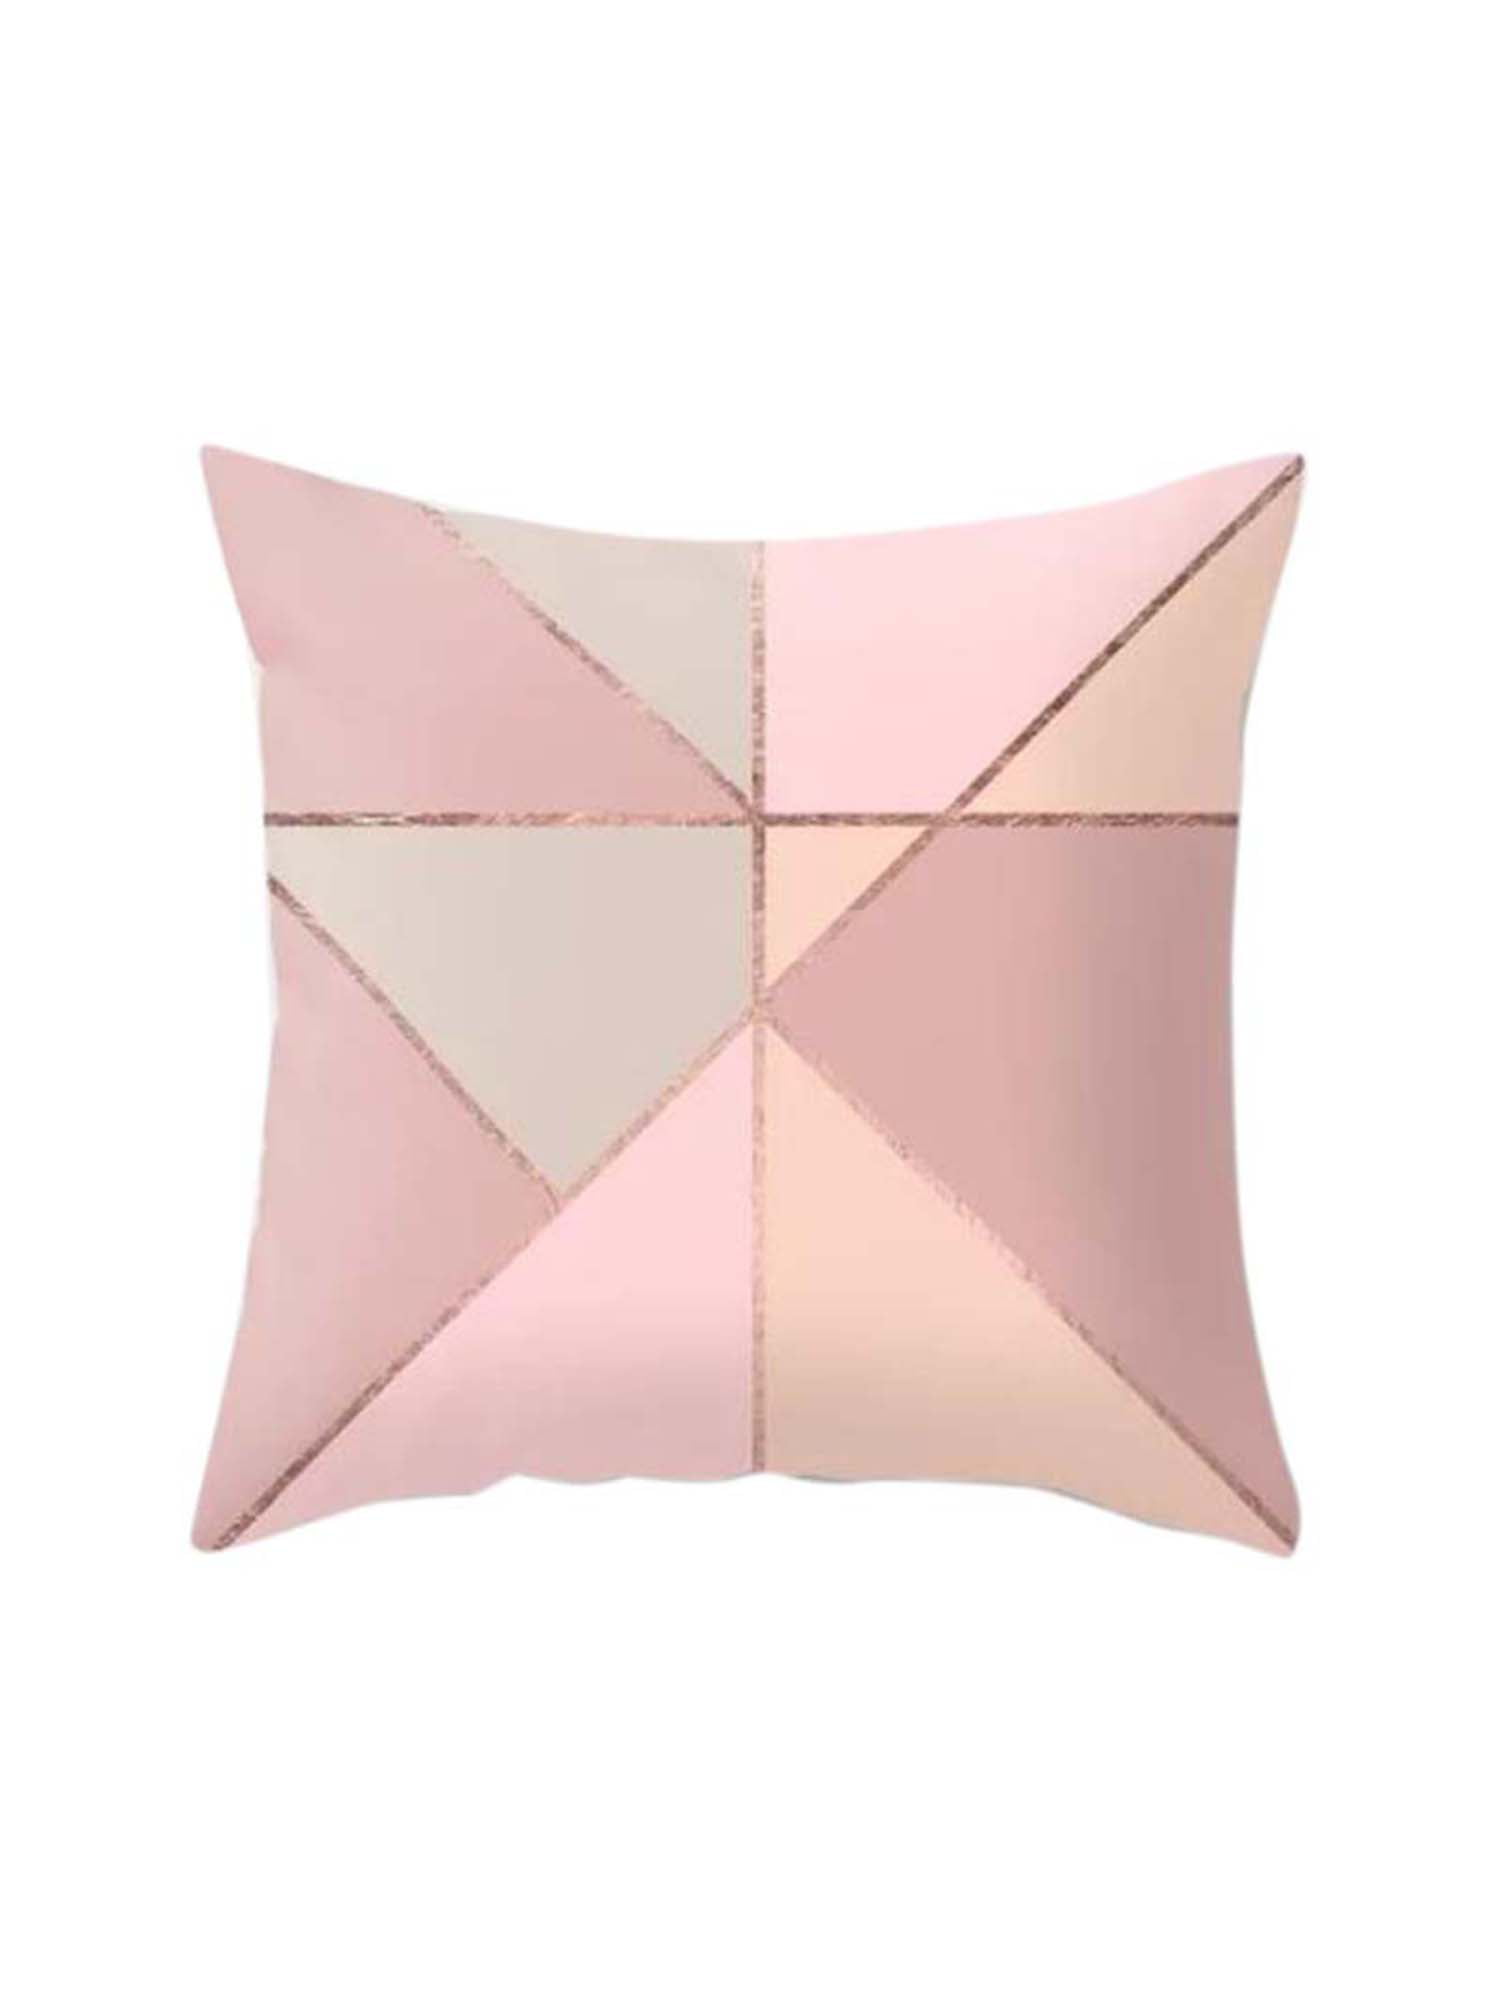 Rose Gold Pink Throw Pillow Case Cushion Cover Pillowcase Home Sofa Bed Decor Walmart Com Walmart Com